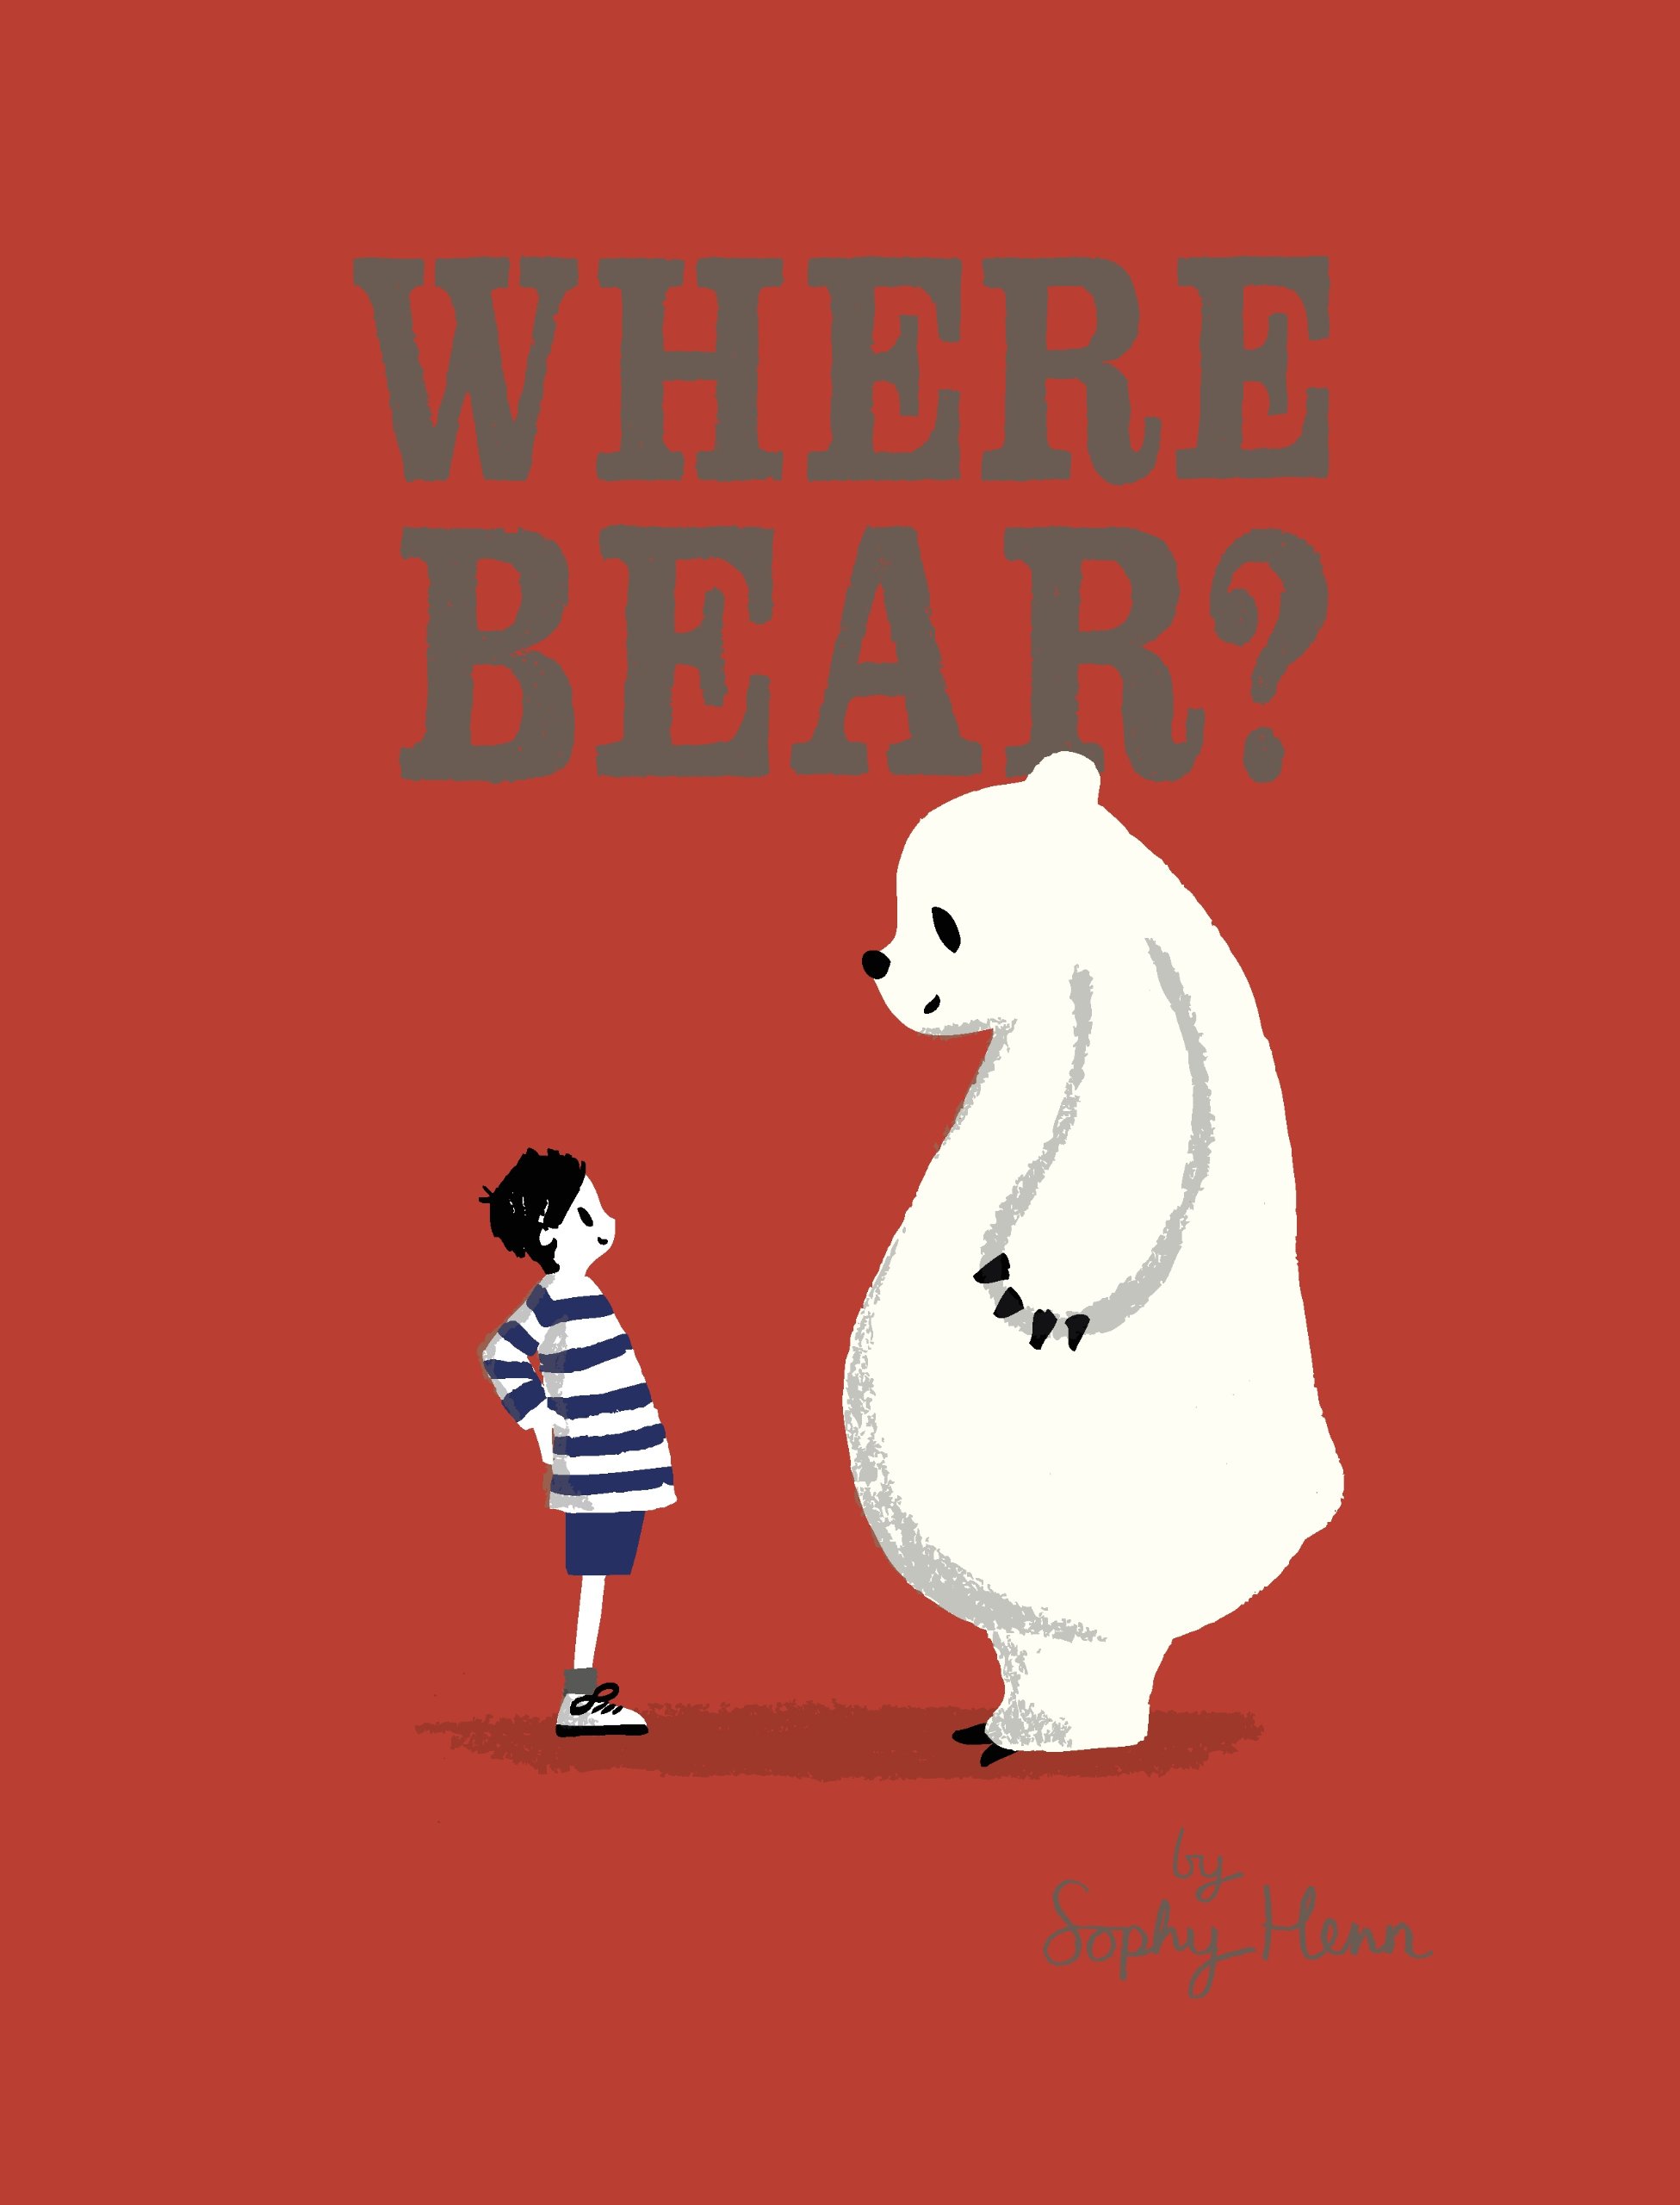 where bear